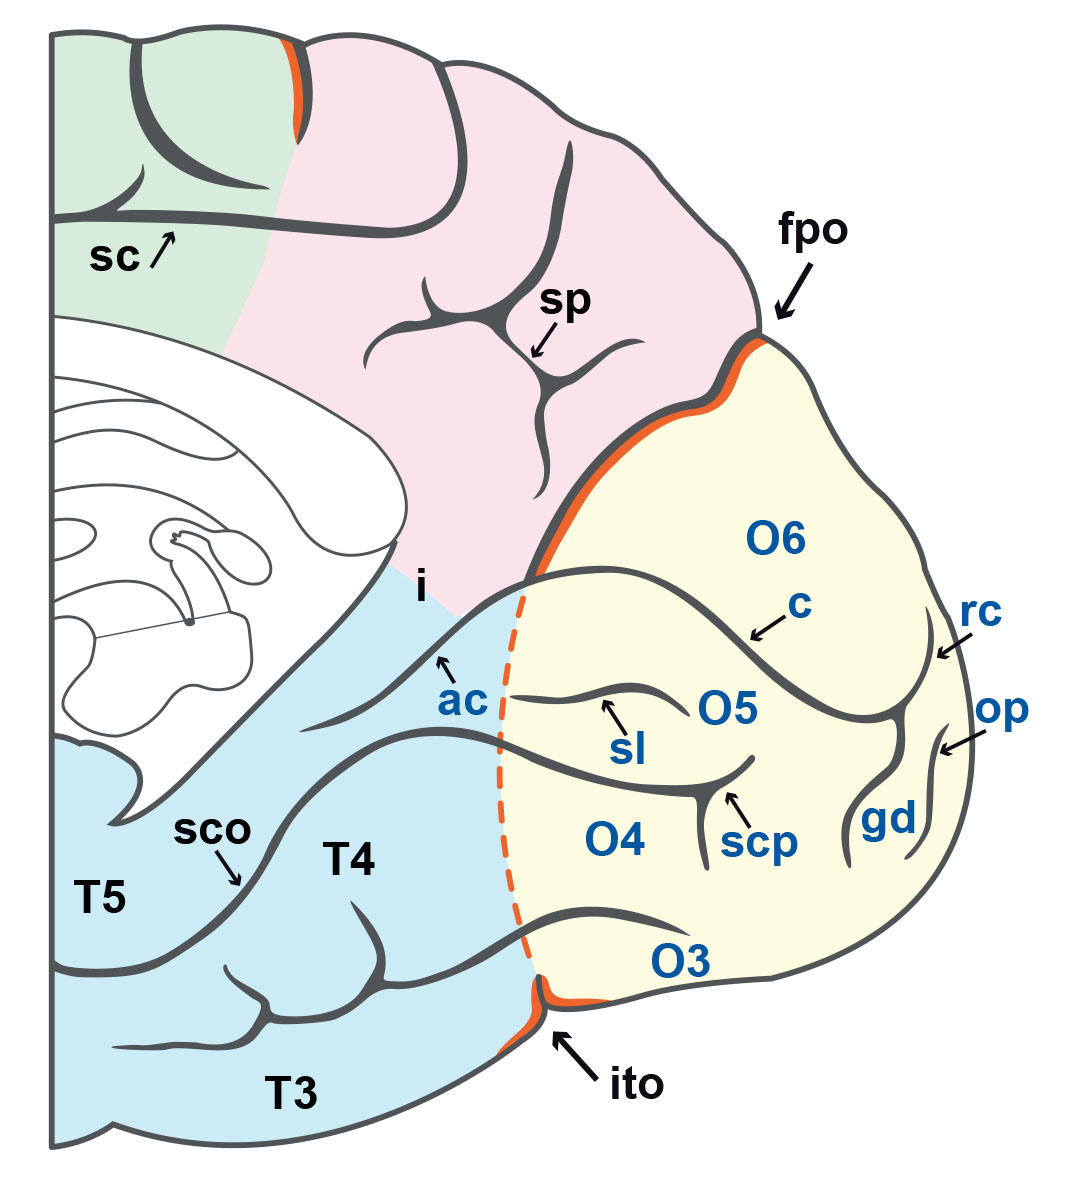 Anatomie du cortex cérébral : lobe occipital - Figure 2